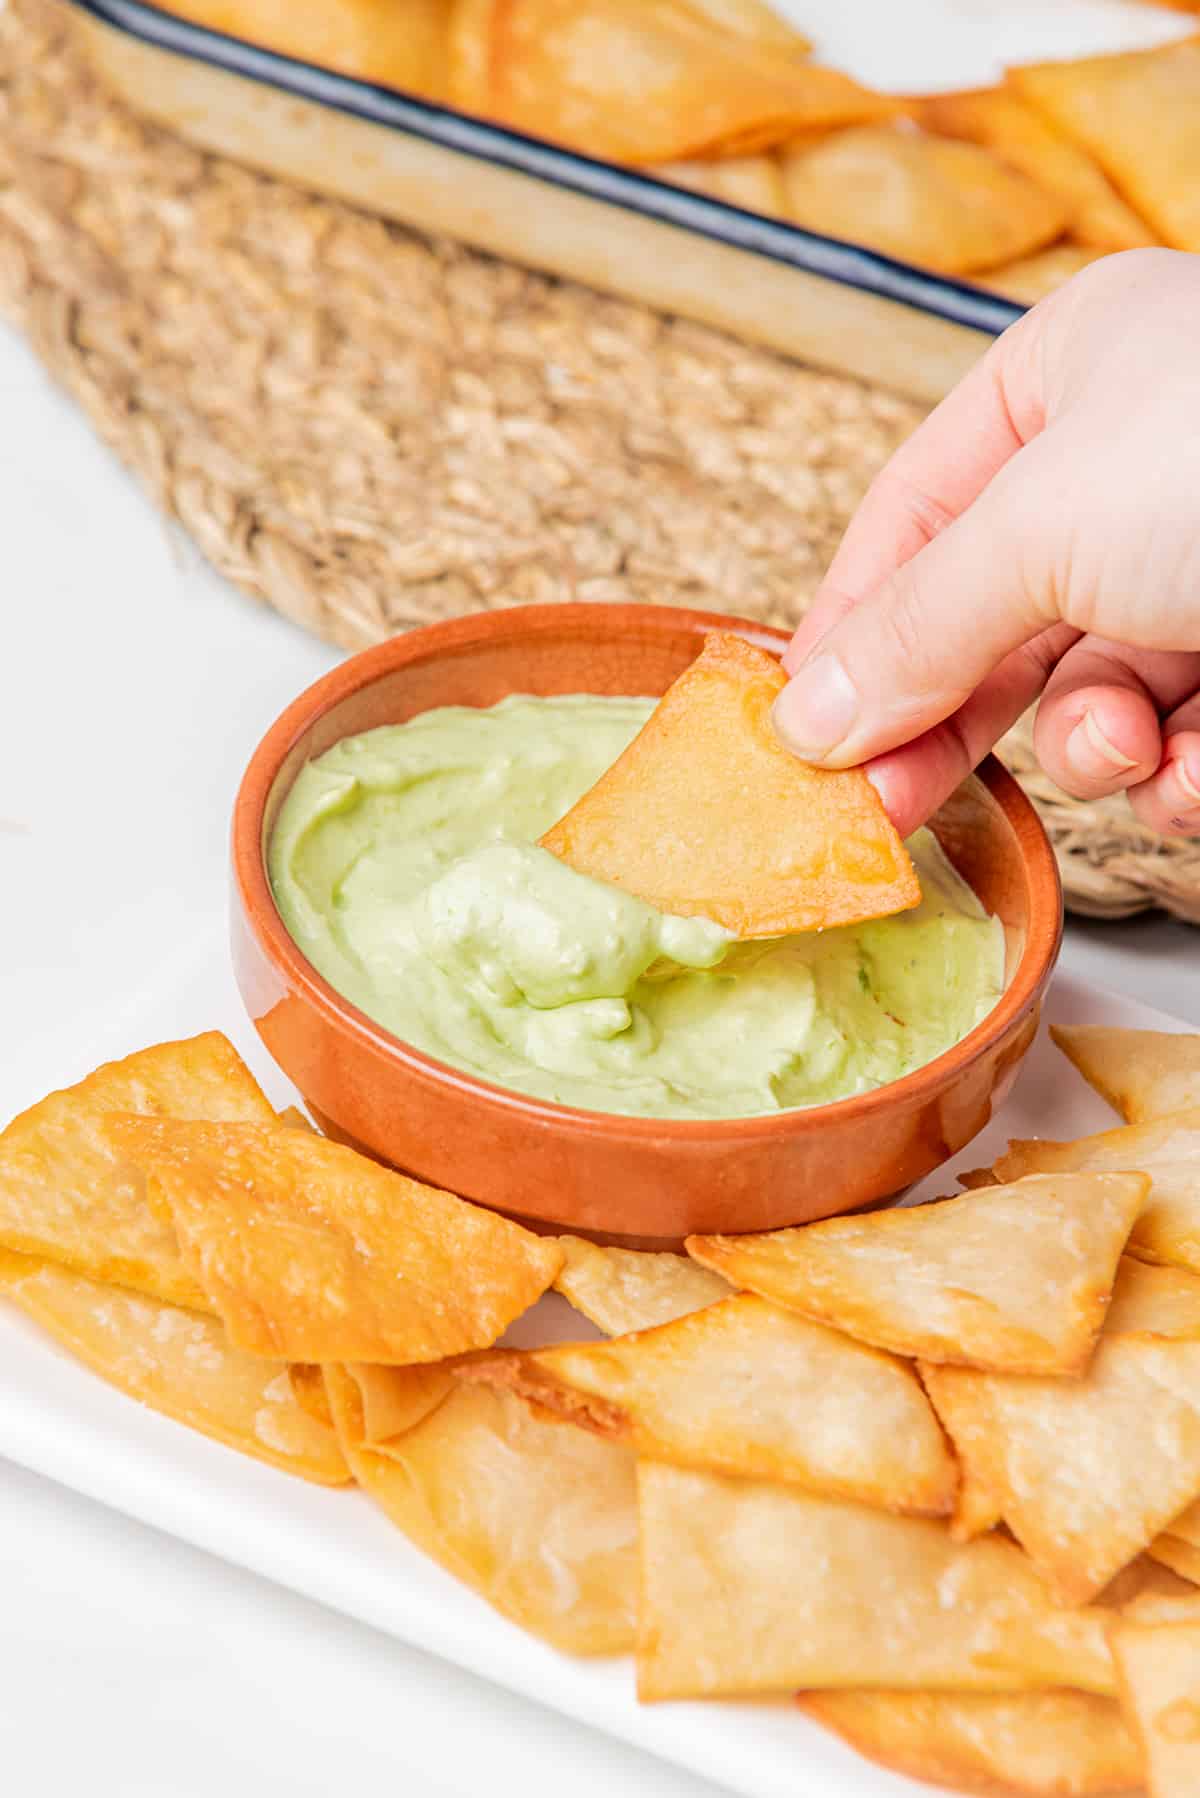 A hand dipping a chip into creamy guacamole.